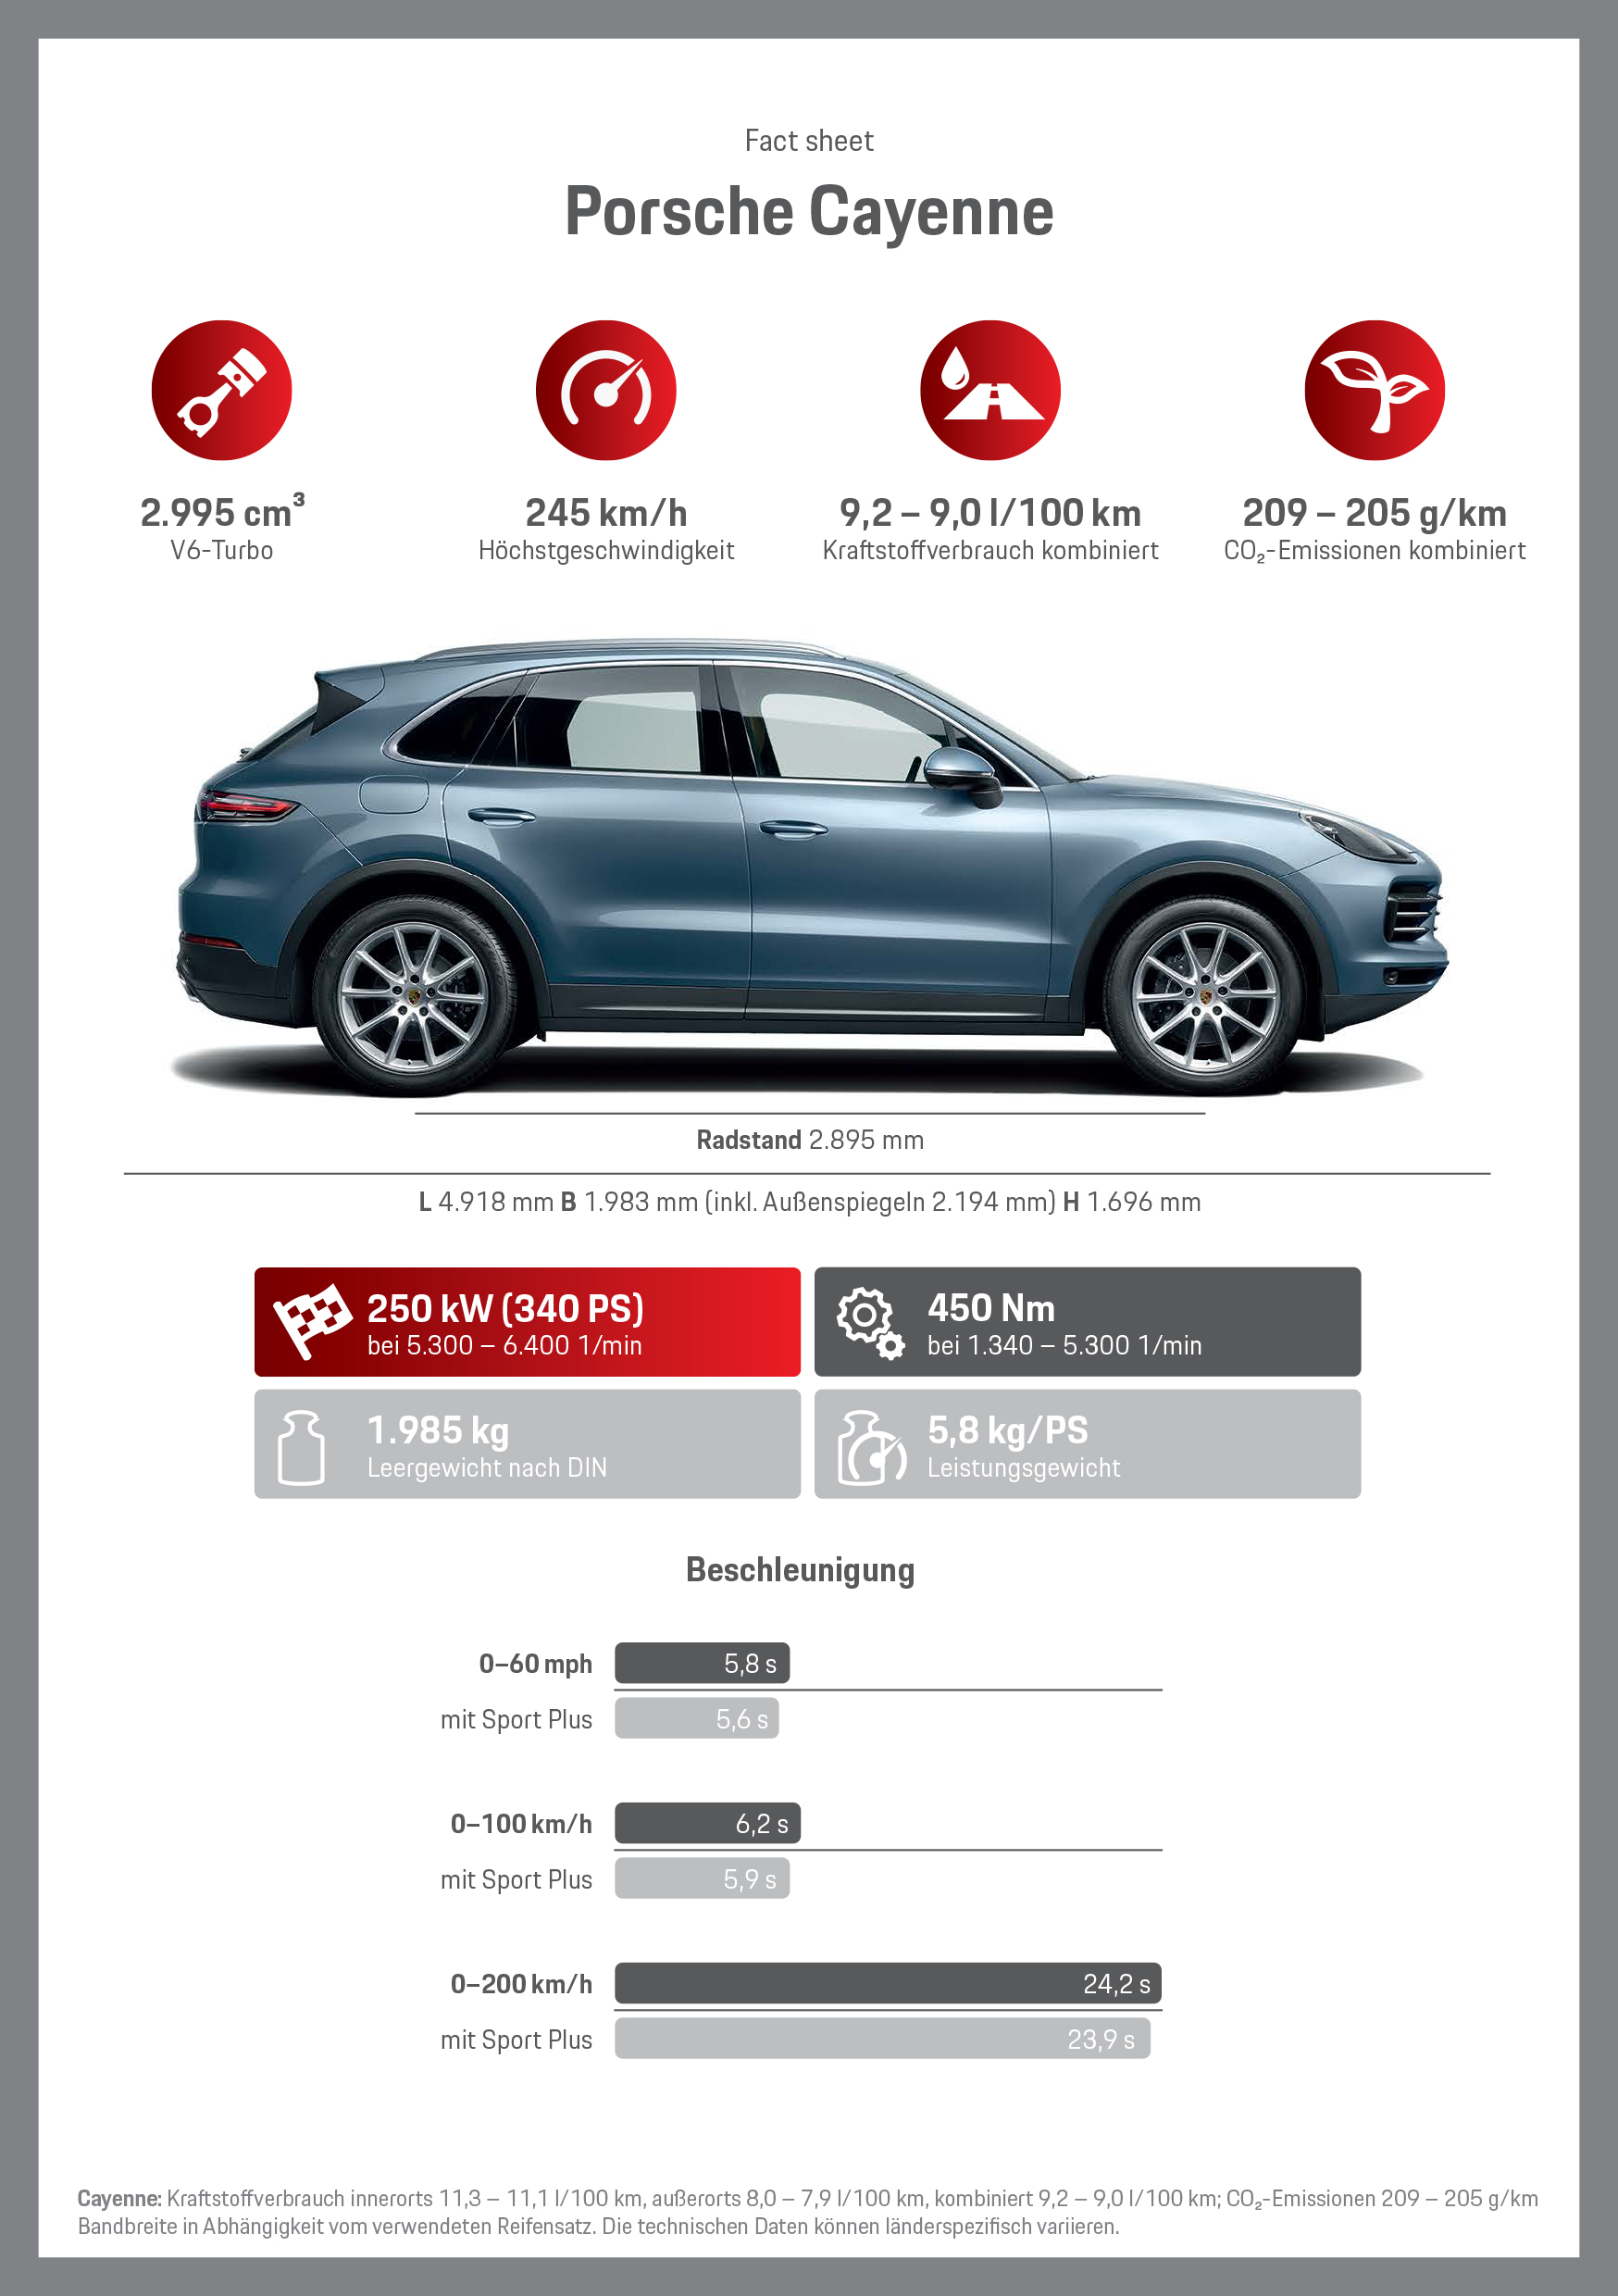 Cayenne S, Infografik, 2017, Porsche AG